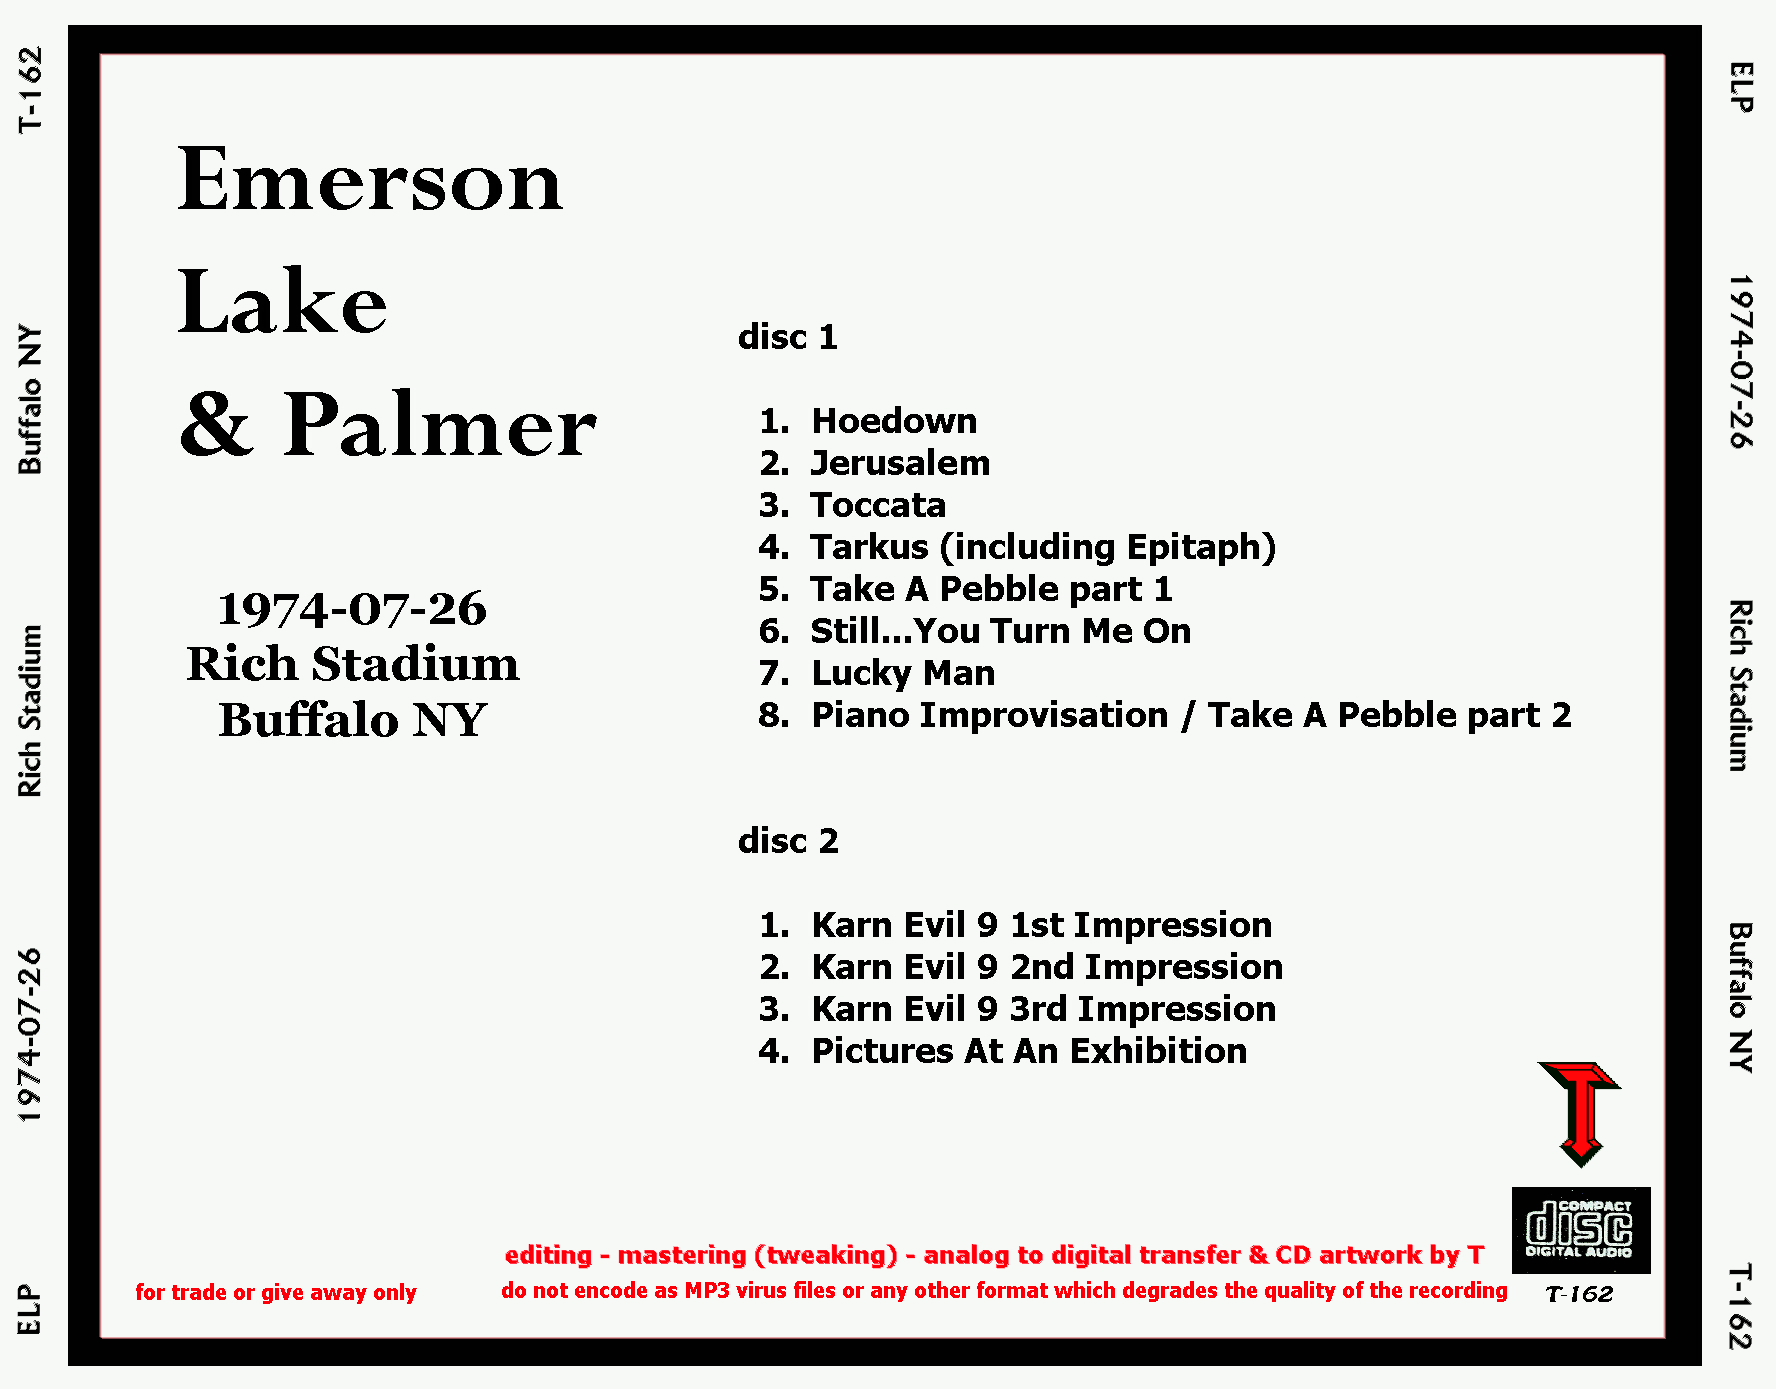 EmersonLakePalmer1974-07-26RichStadiumBuffaloNY (4).JPG